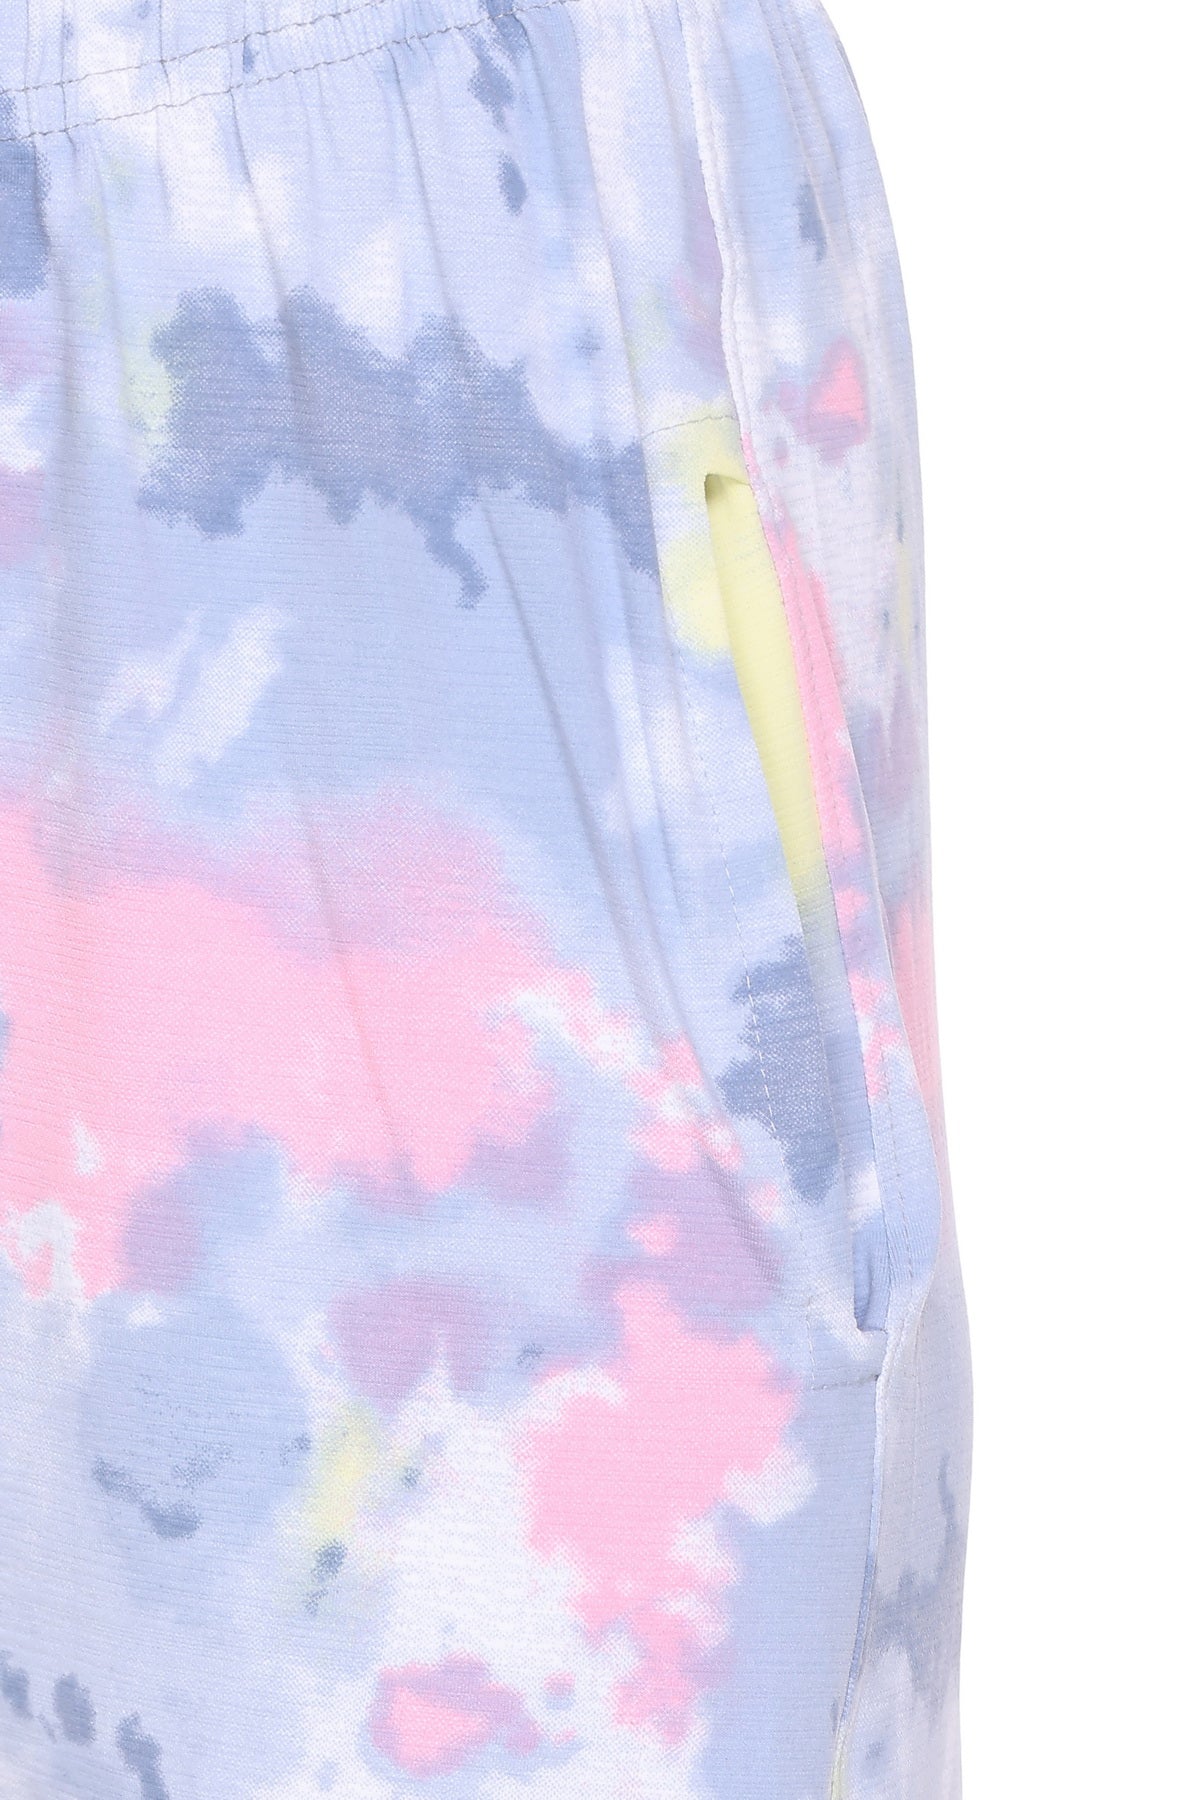 Tie-Dye Night Pajamas For Women - Grey & Pink